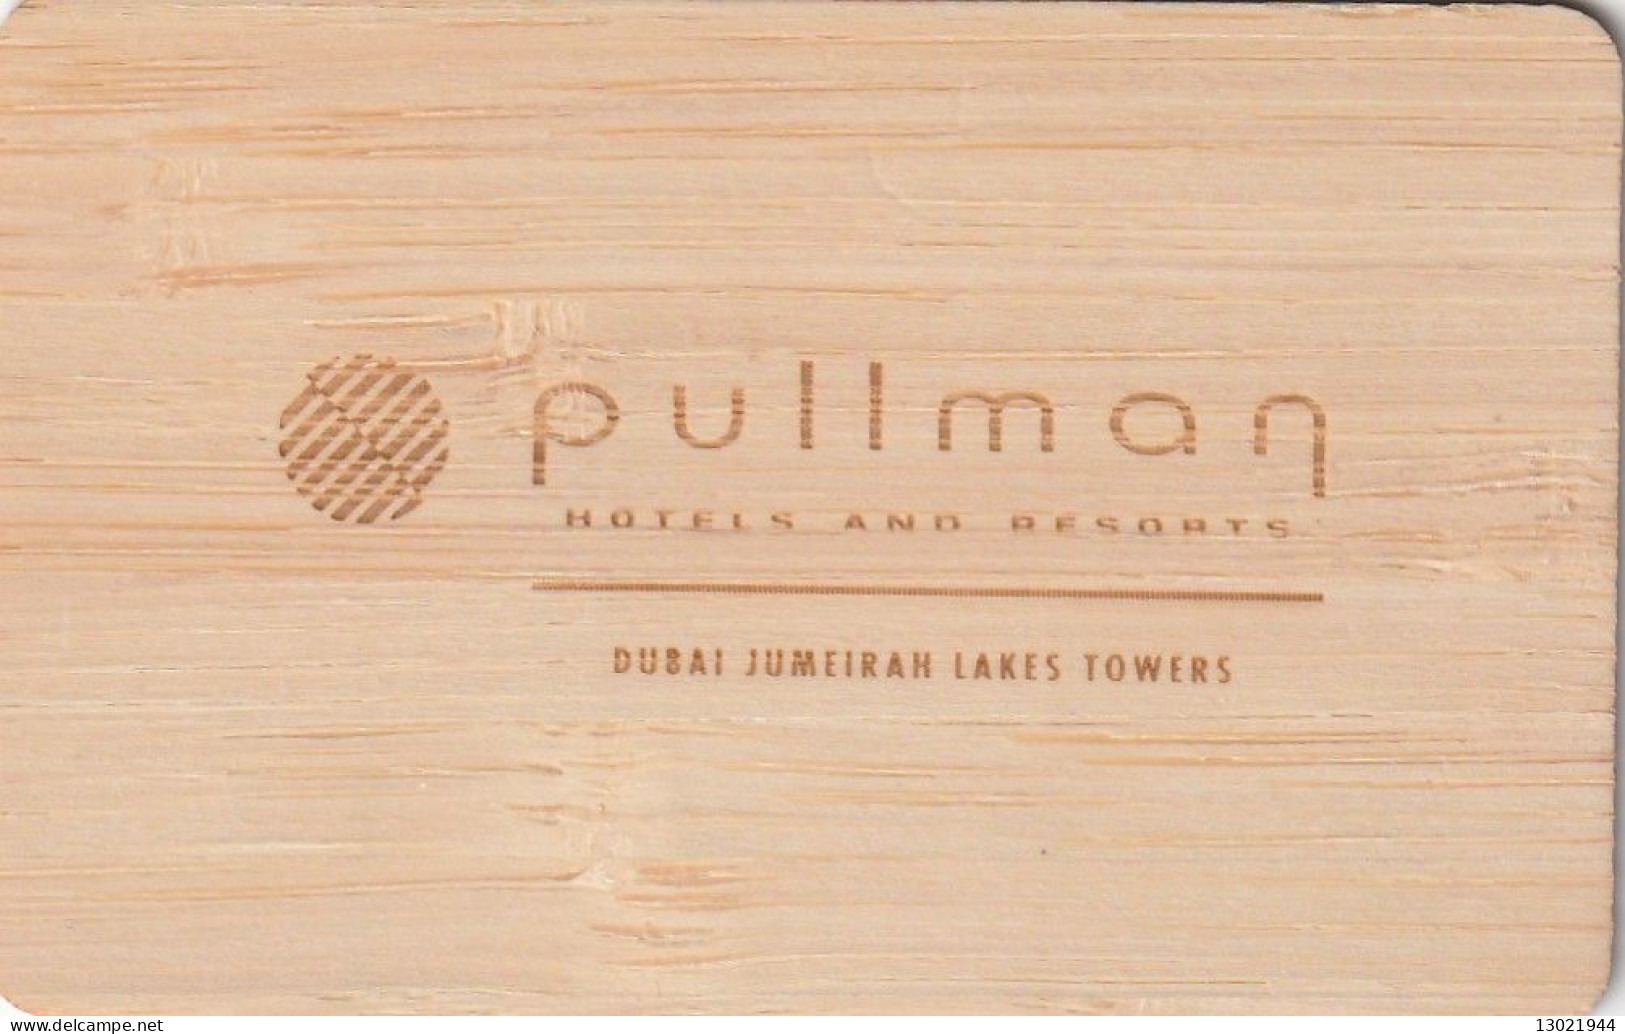 EMIRATI ARABI  KEY HOTEL  PULLMAN DUBAI JUMEIRAH LAKES TOWERS - Wooden Card. - Hotel Keycards